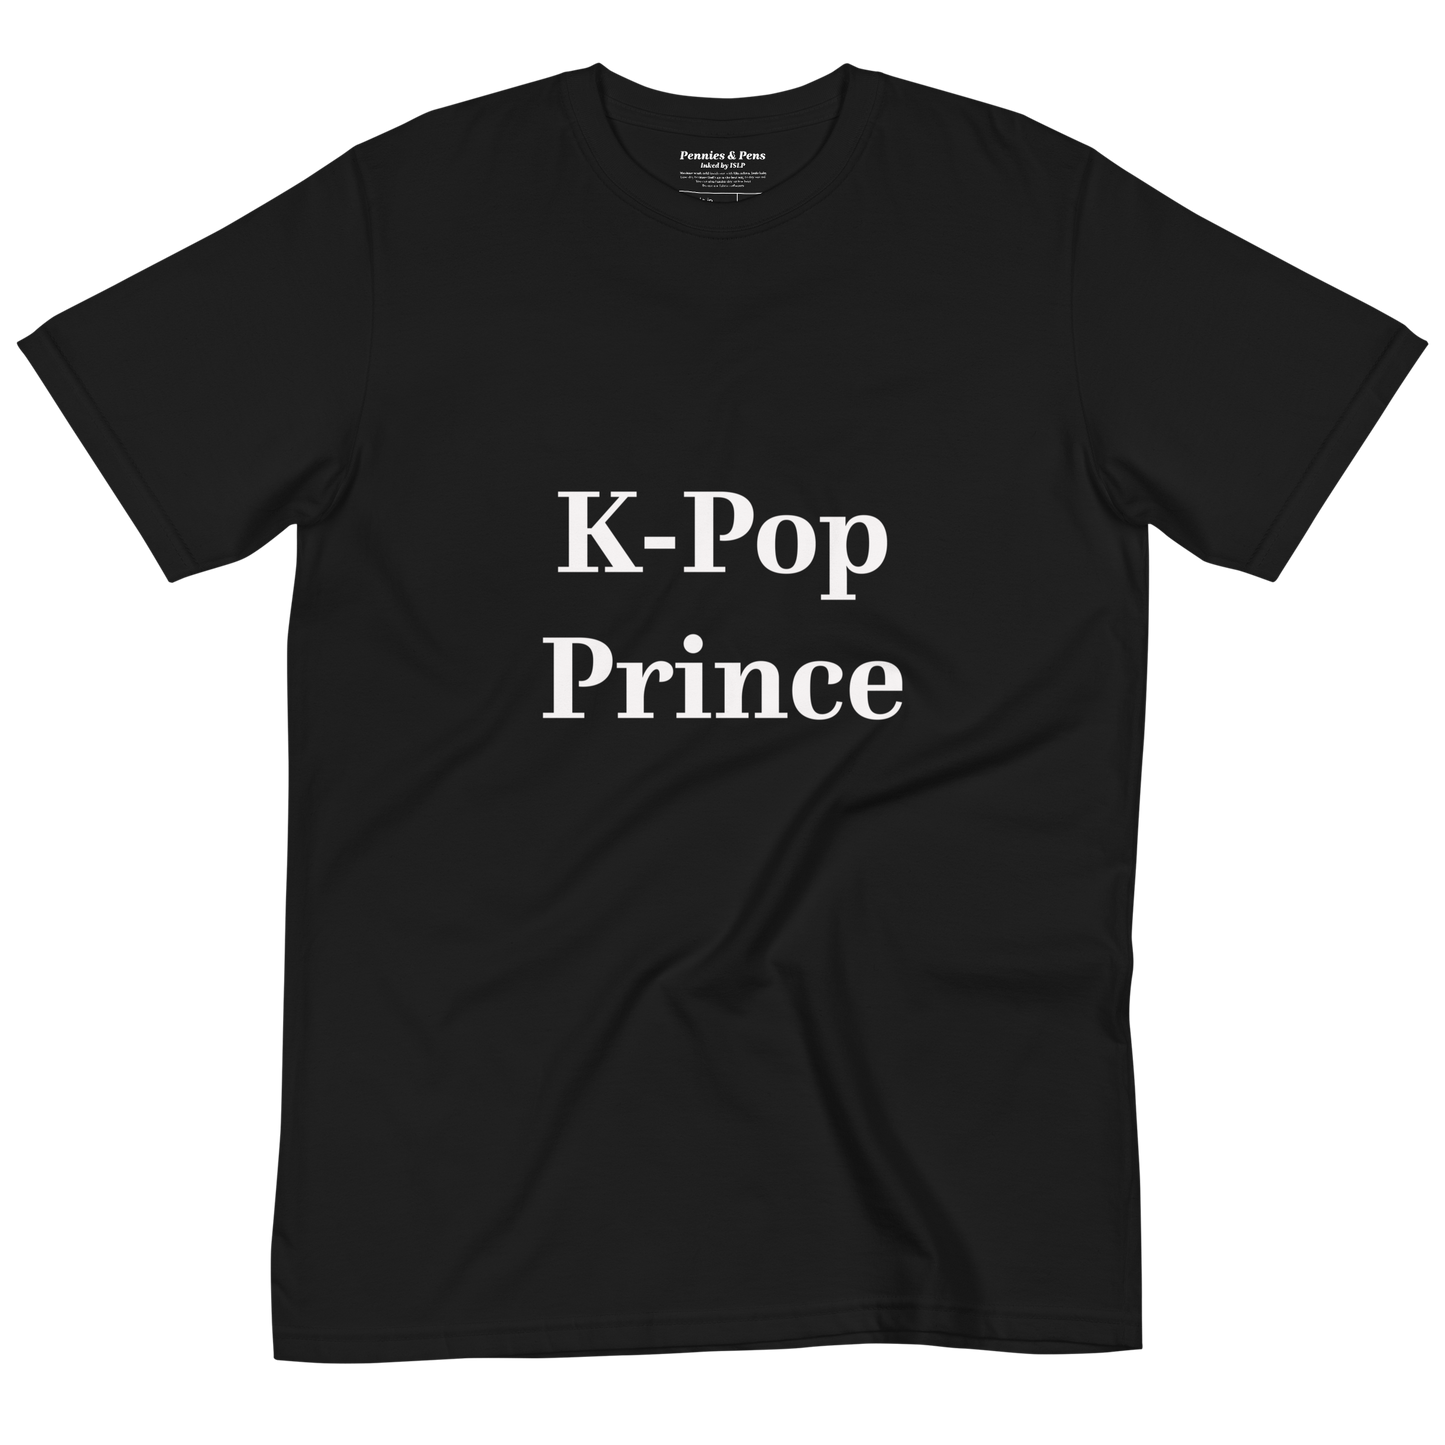 K-Pop Prince T-Shirt